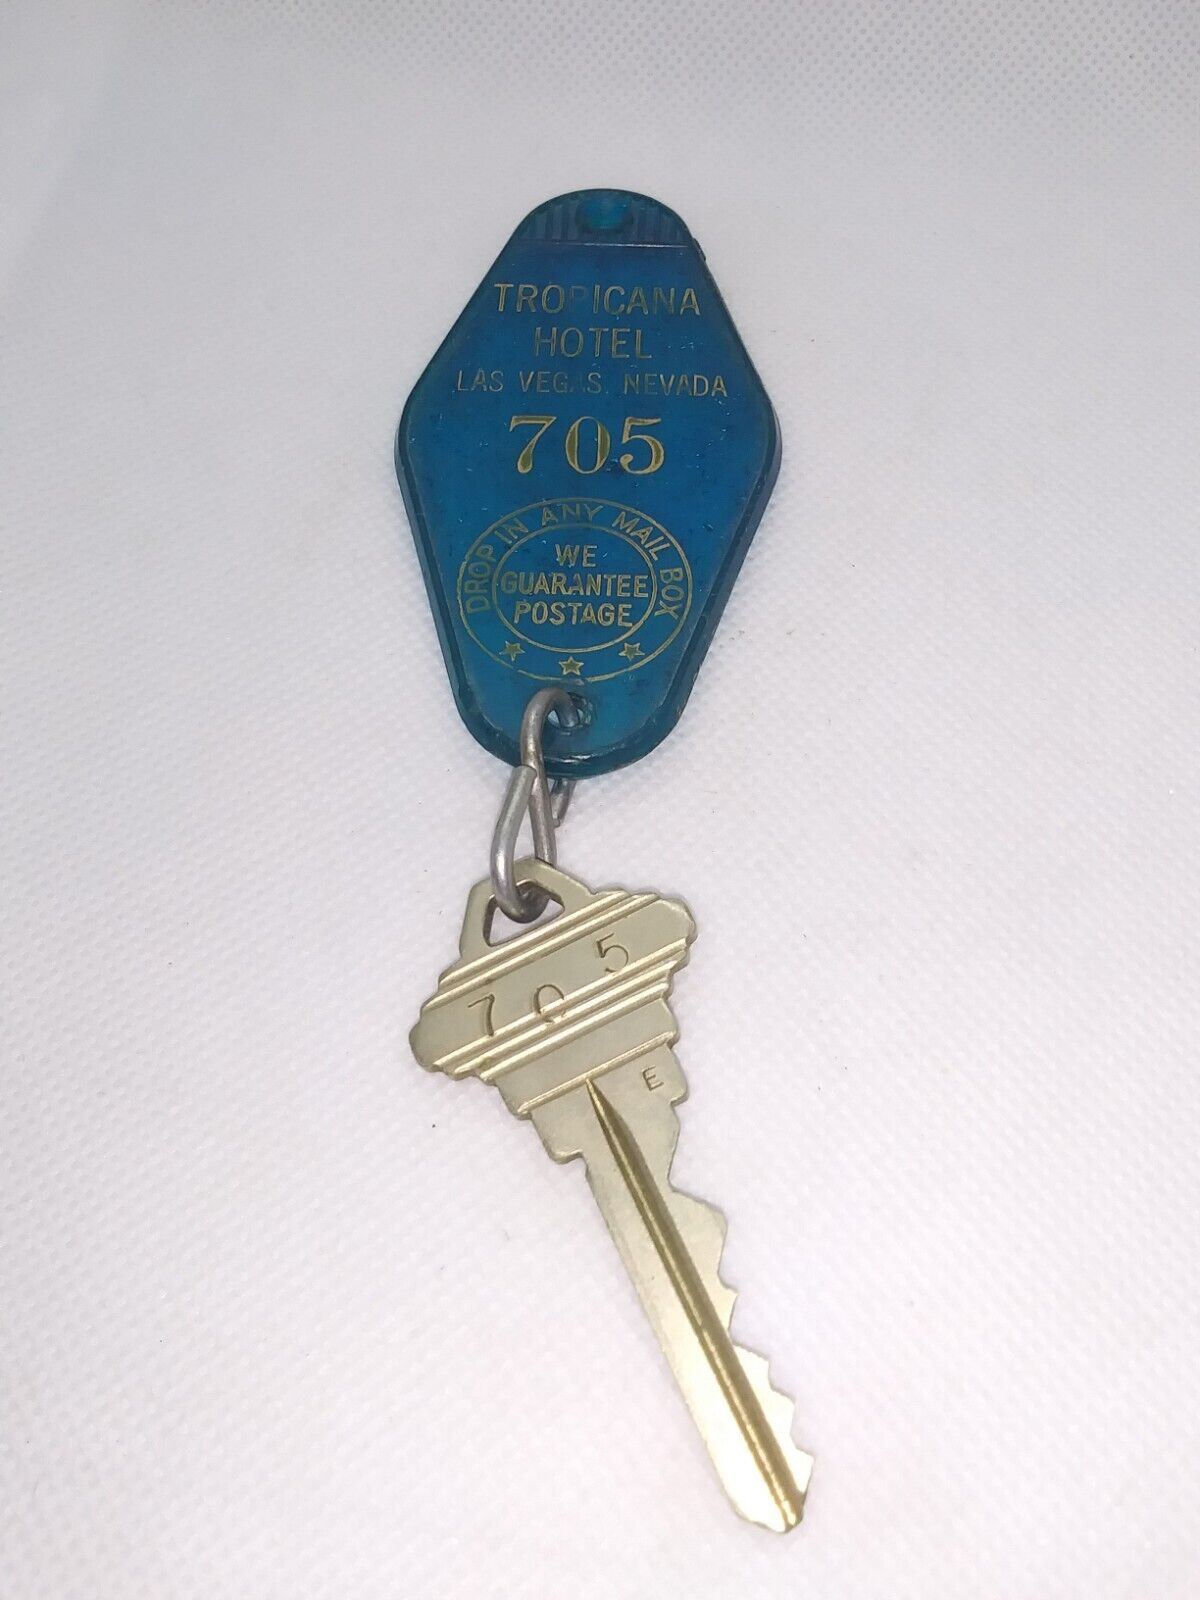 Vintage Tropicana Hotel Las Vegas Nevada Keychain #705 With Schlage Key